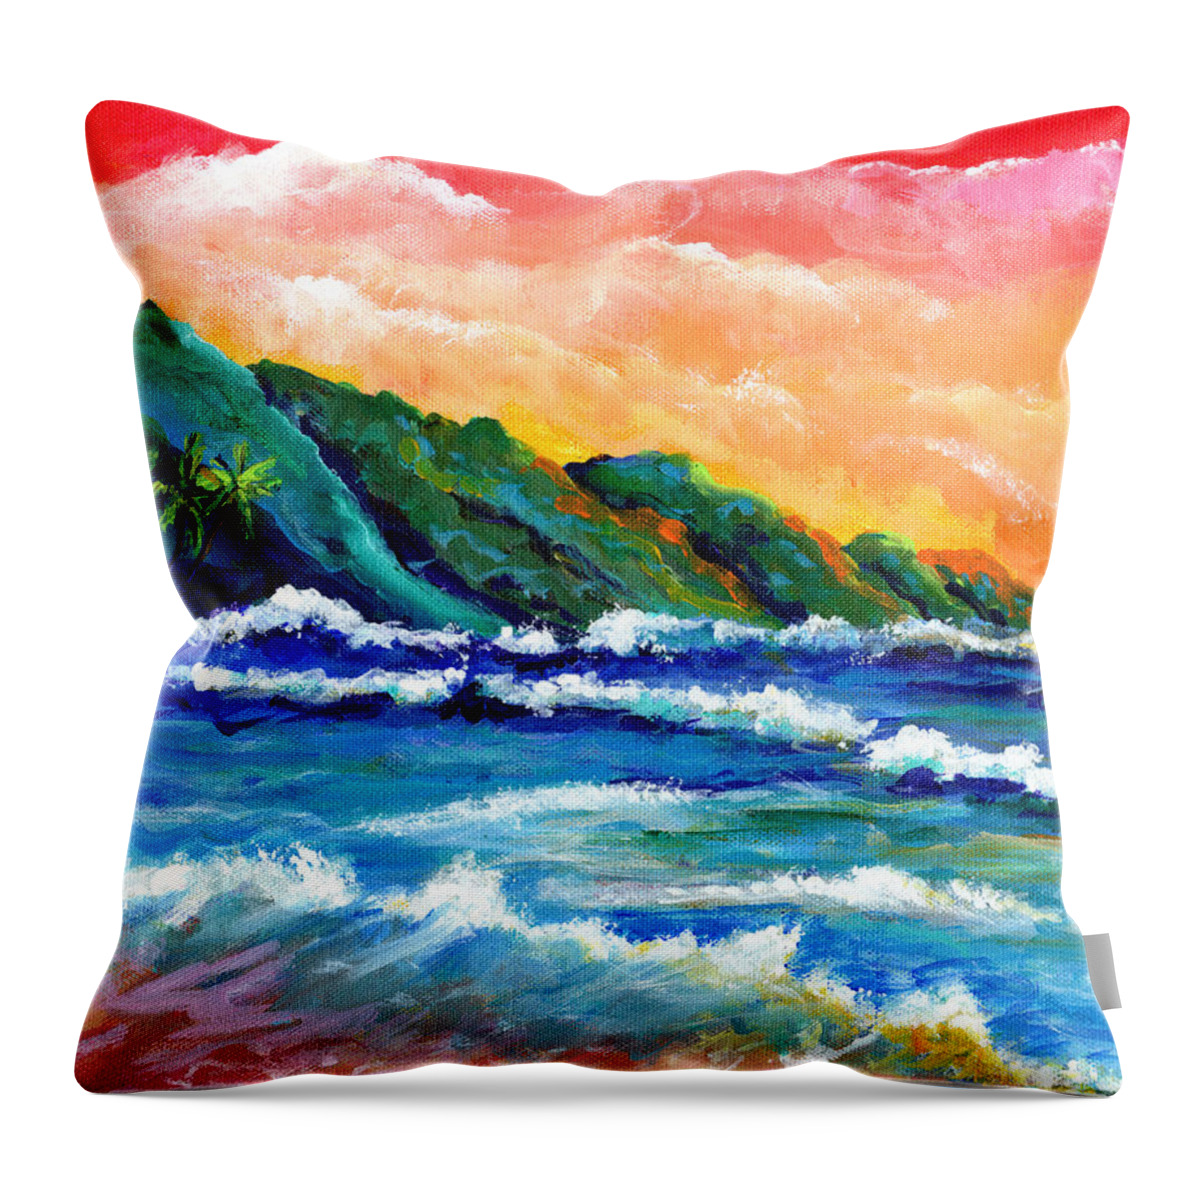 Kauai Throw Pillow featuring the painting Romantic Kauai Sunset by Marionette Taboniar